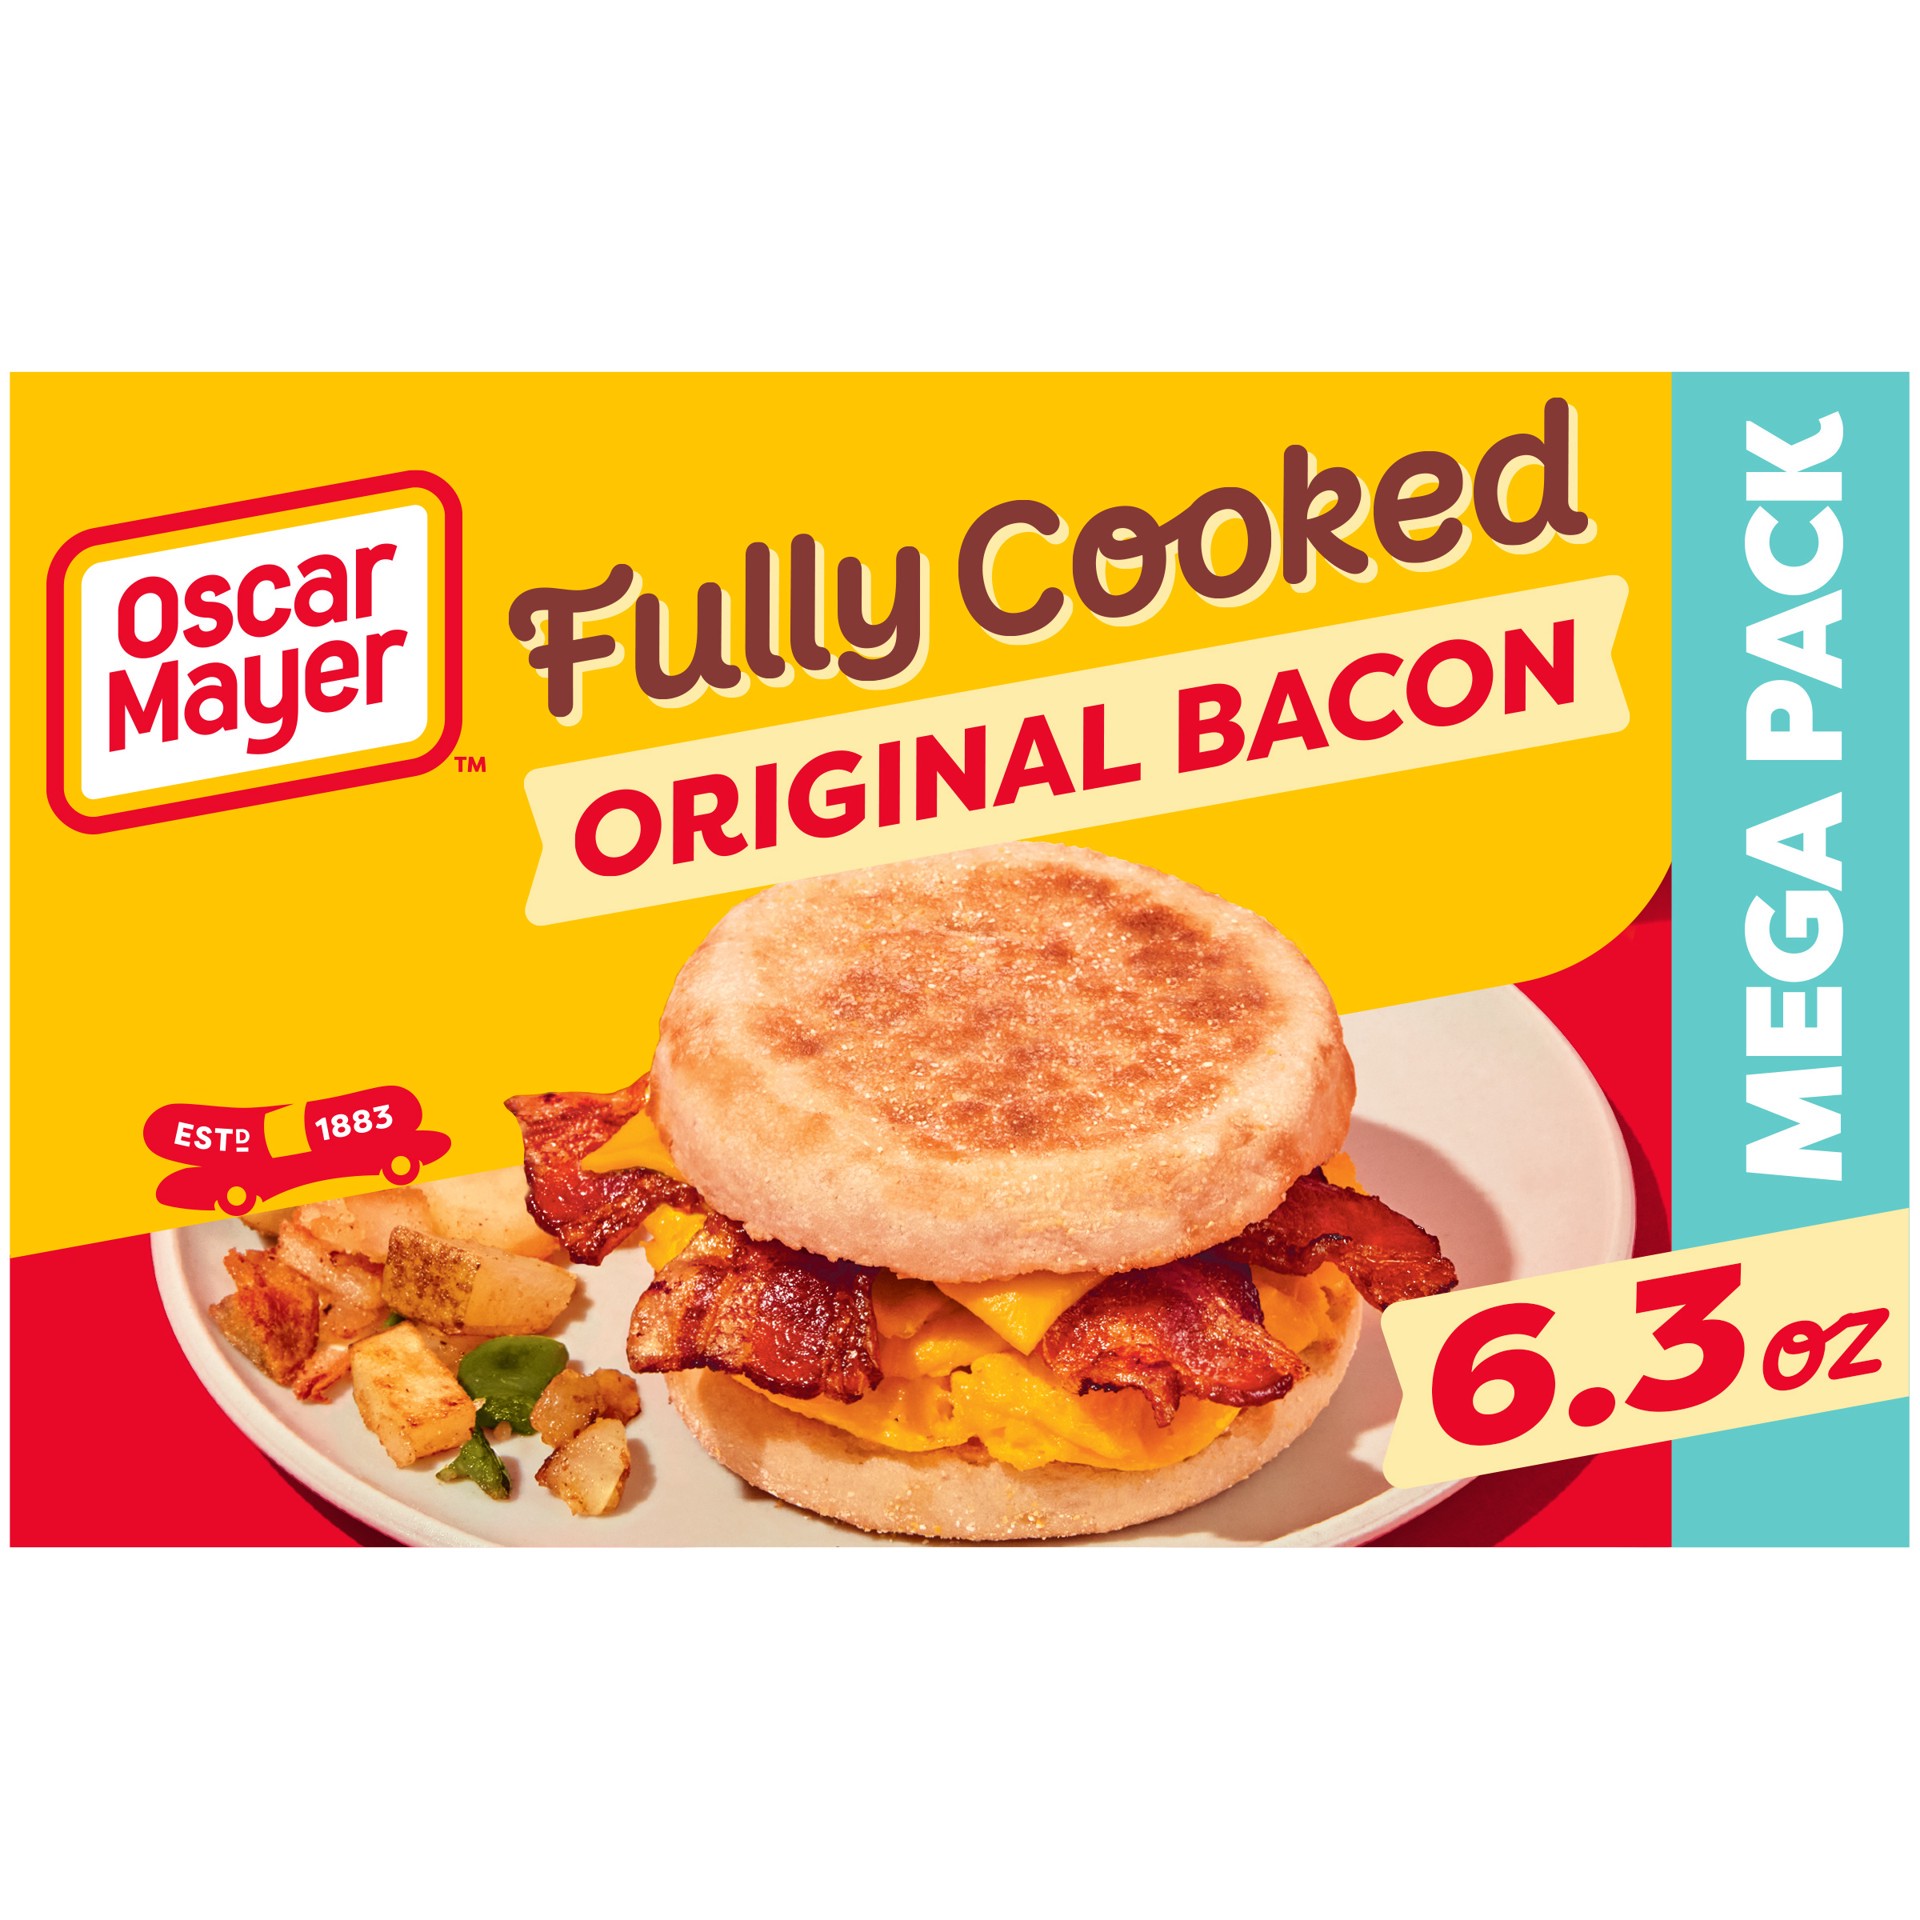 slide 1 of 9, Oscar Mayer Original Fully Cooked Bacon Mega Pack, 6.3 oz Box, 23-25 slices, 6.3 oz